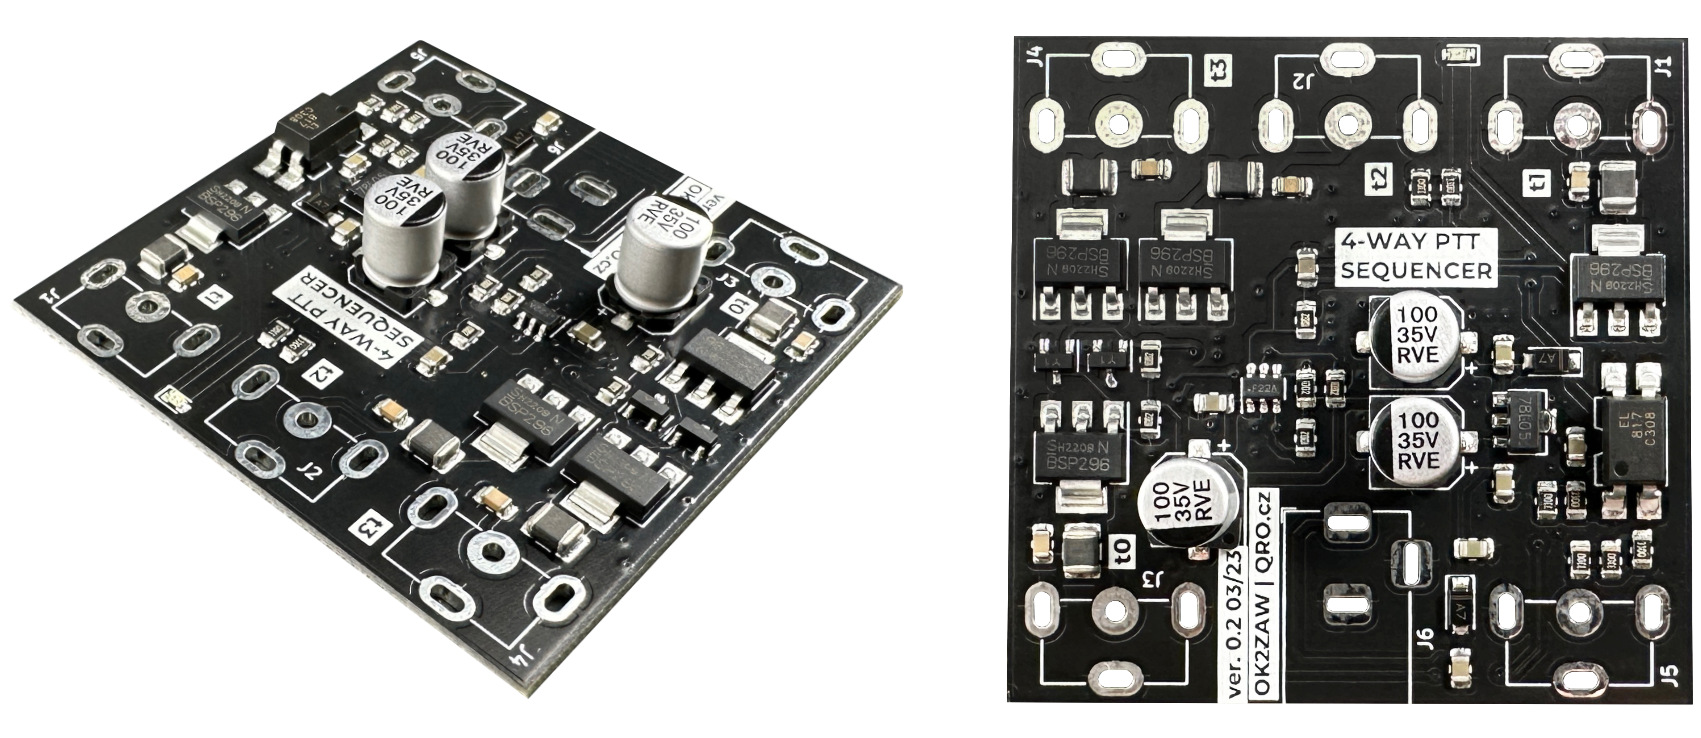 4-way ptt sequencer assembled board qro.cz hamparts.shop